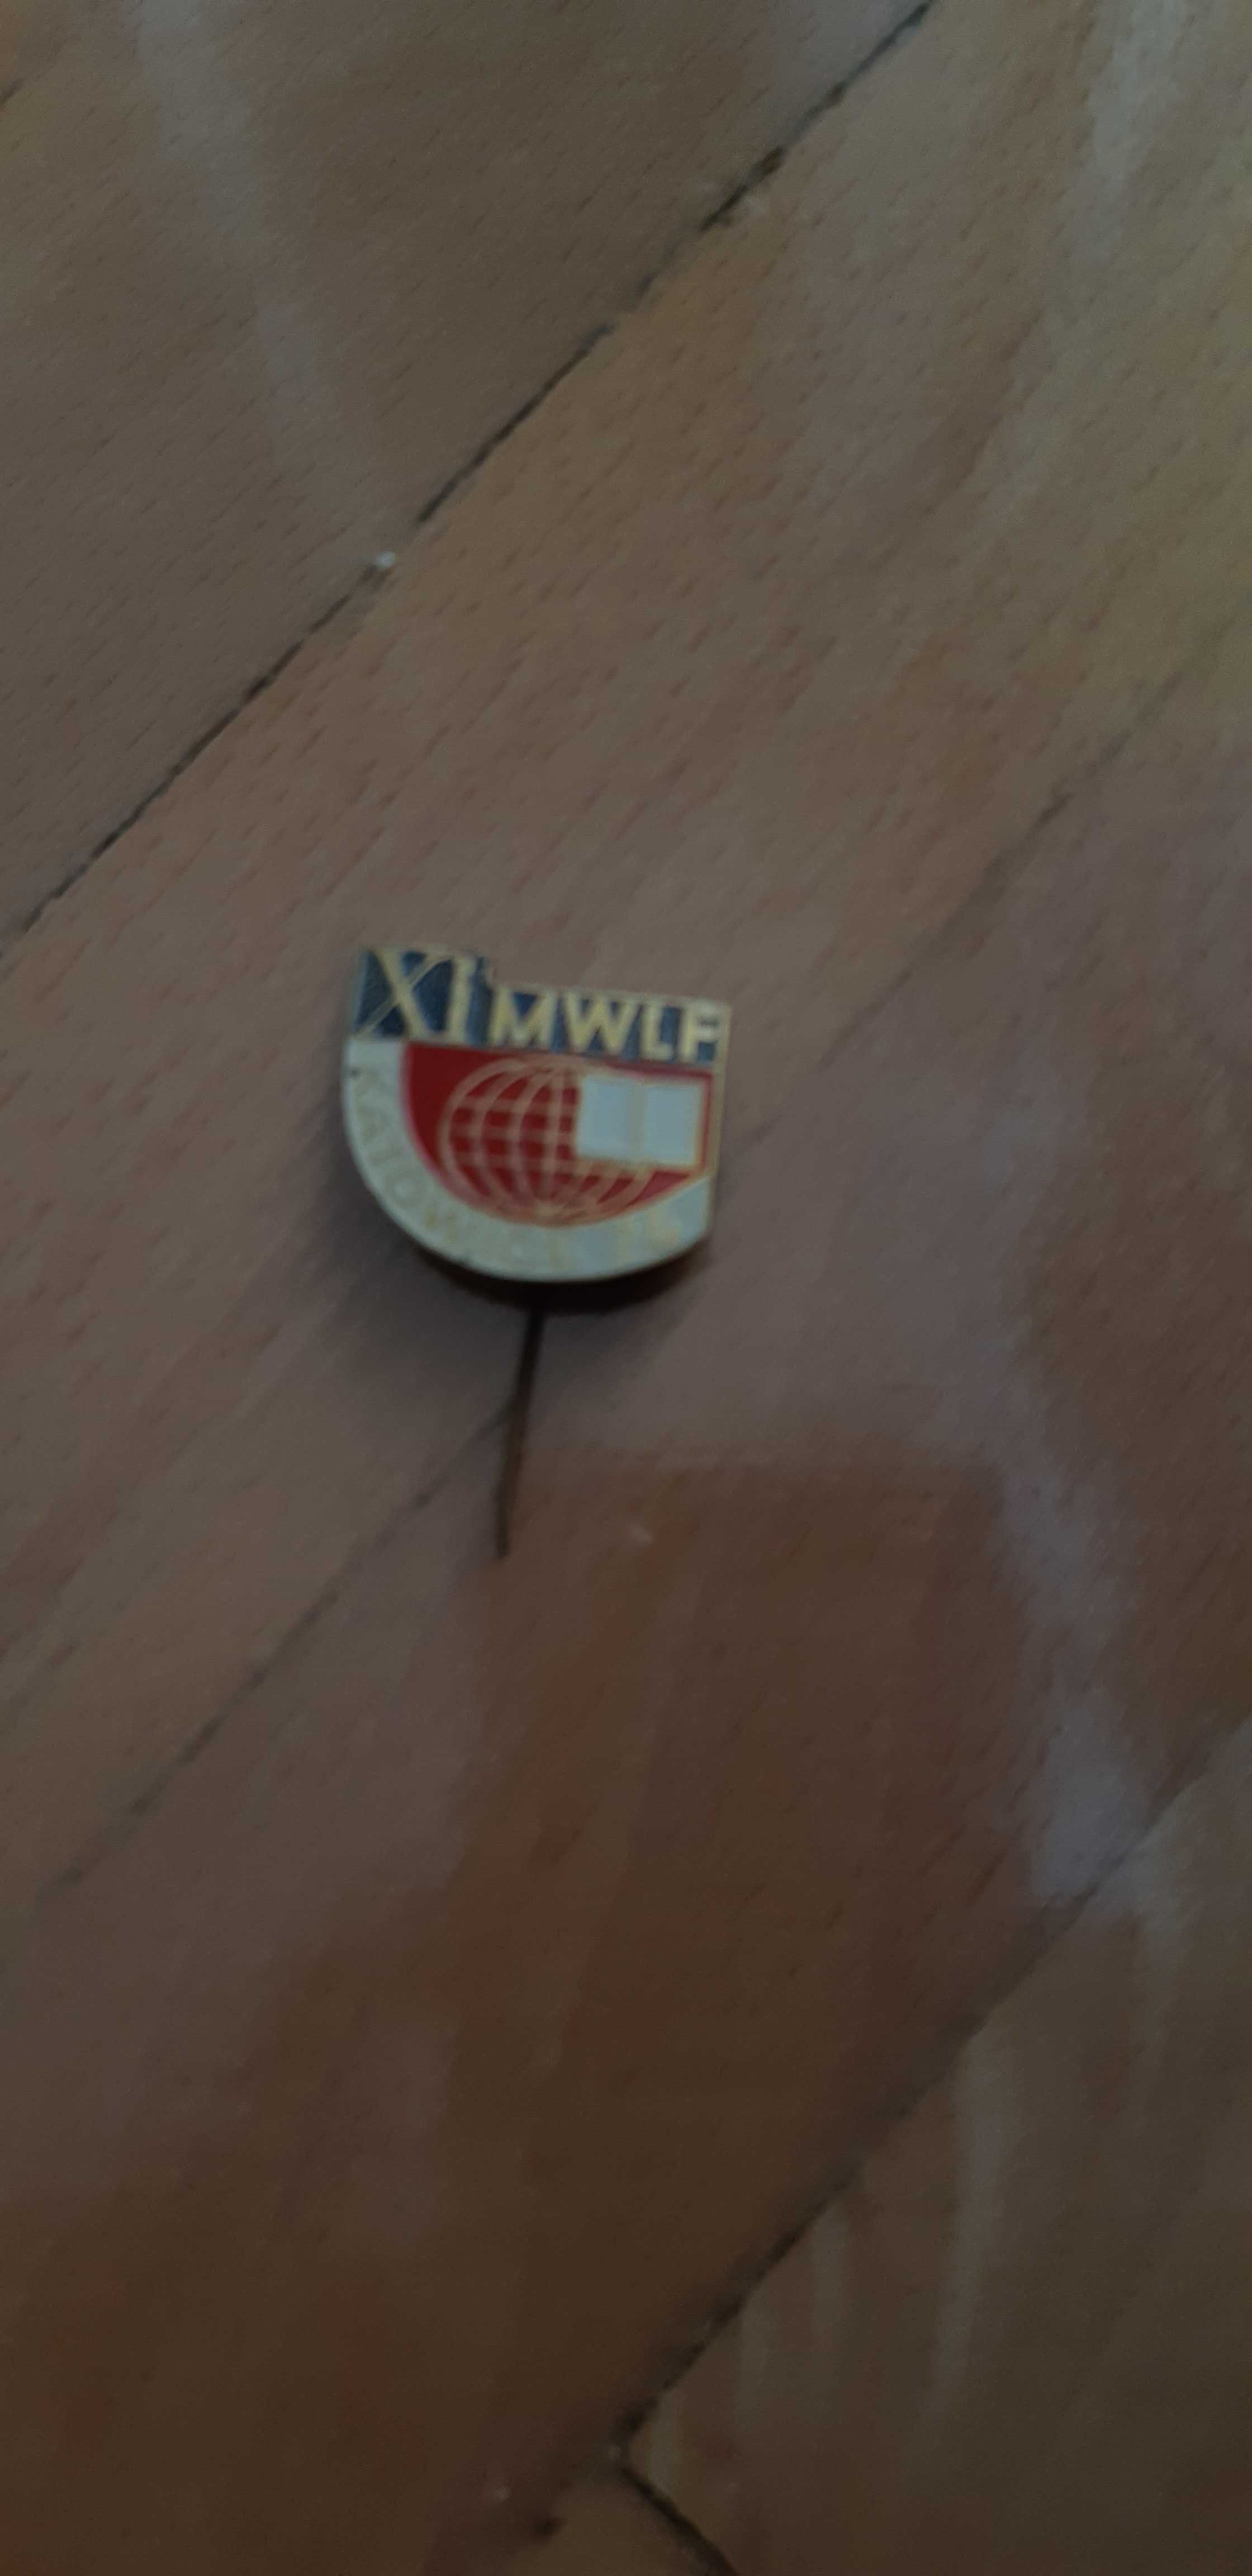 odznaka XI MWLF Katowice 75